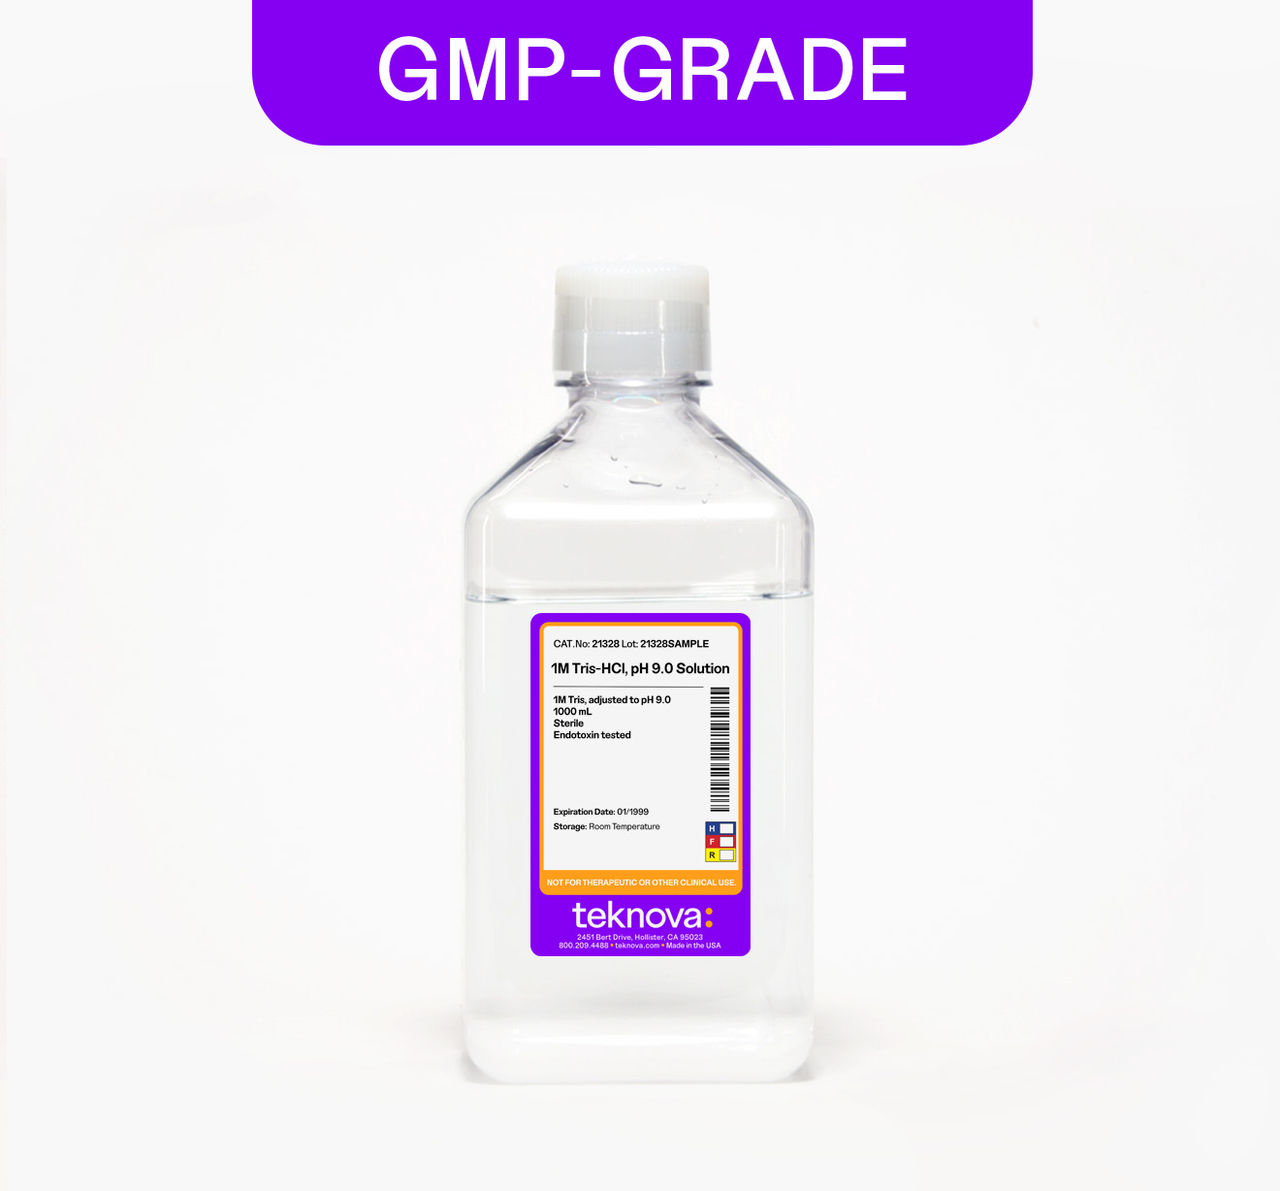 1M Tris-HCl, pH 9.0 Solution, 1000mL, GMP-grade